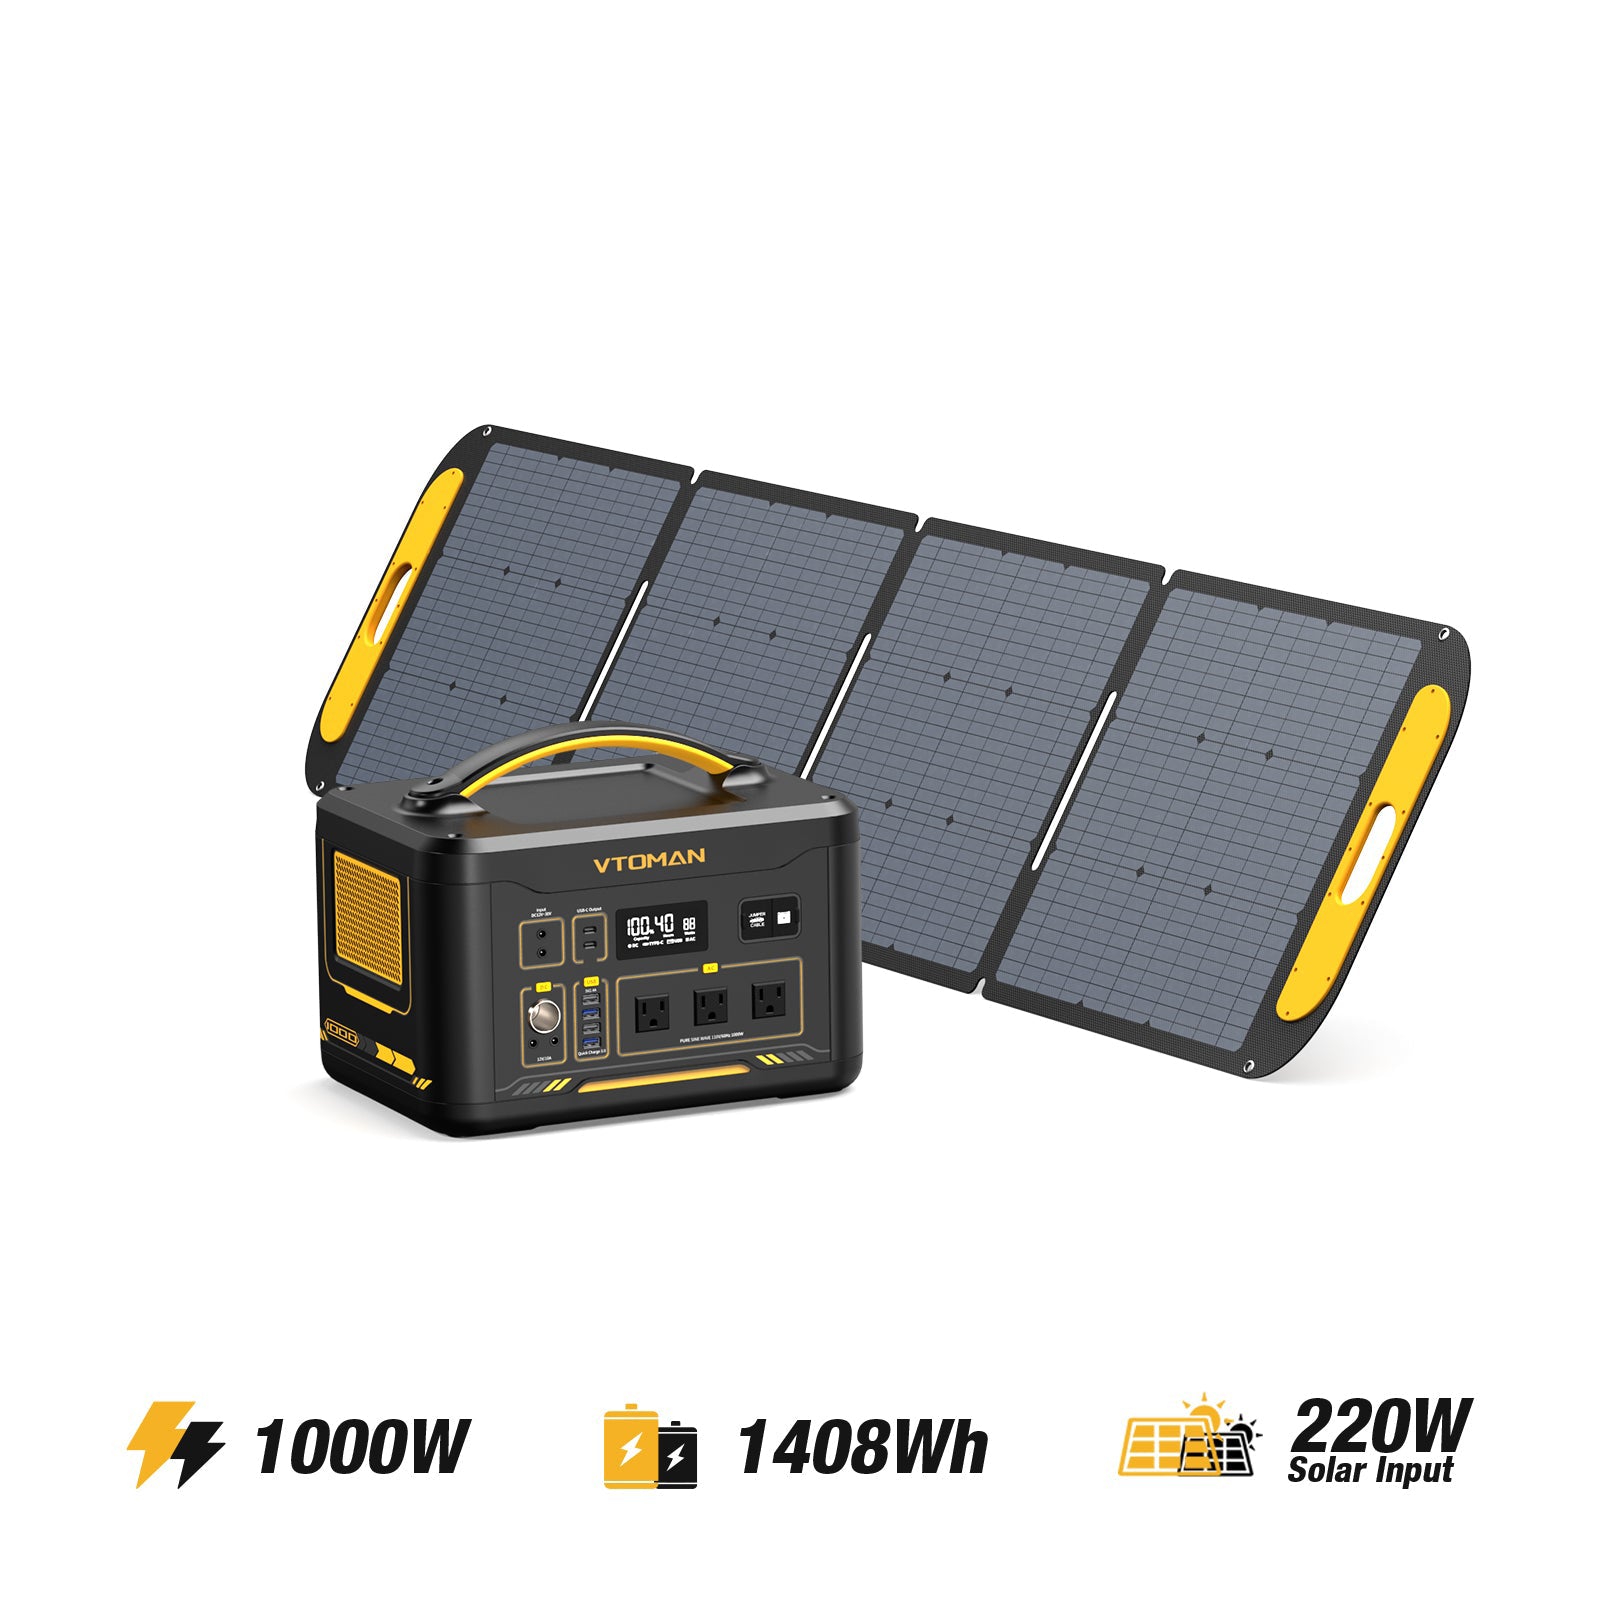 VTOMAN VS220 Portable Solar Panel 220W 19V